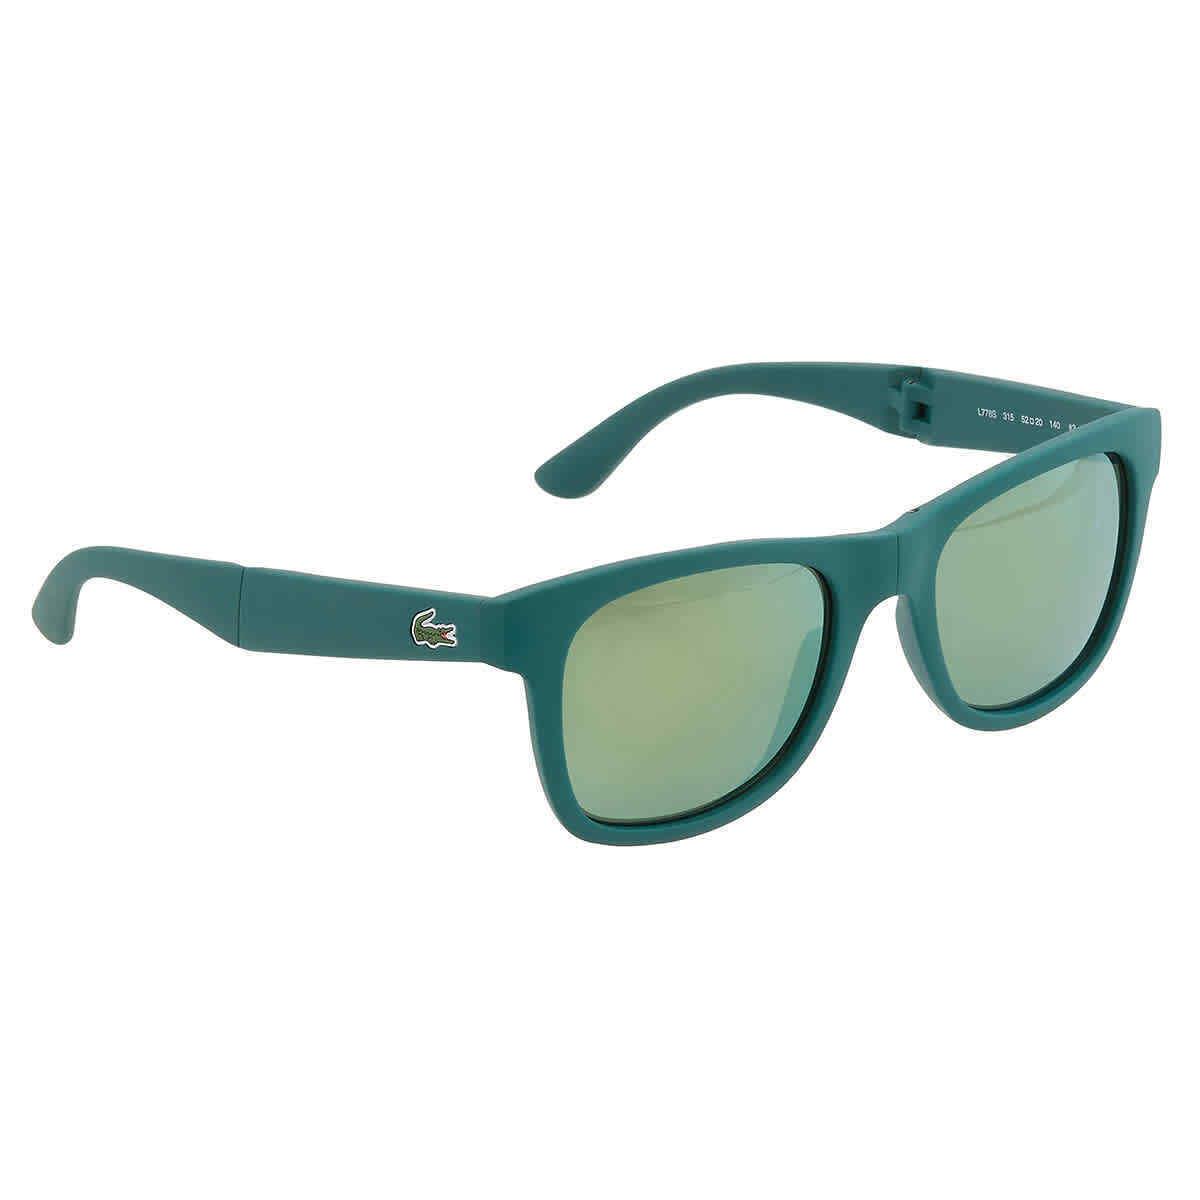 Lacoste Green Square Unisex Folding Sunglasses L778S 315 52 L778S 315 52